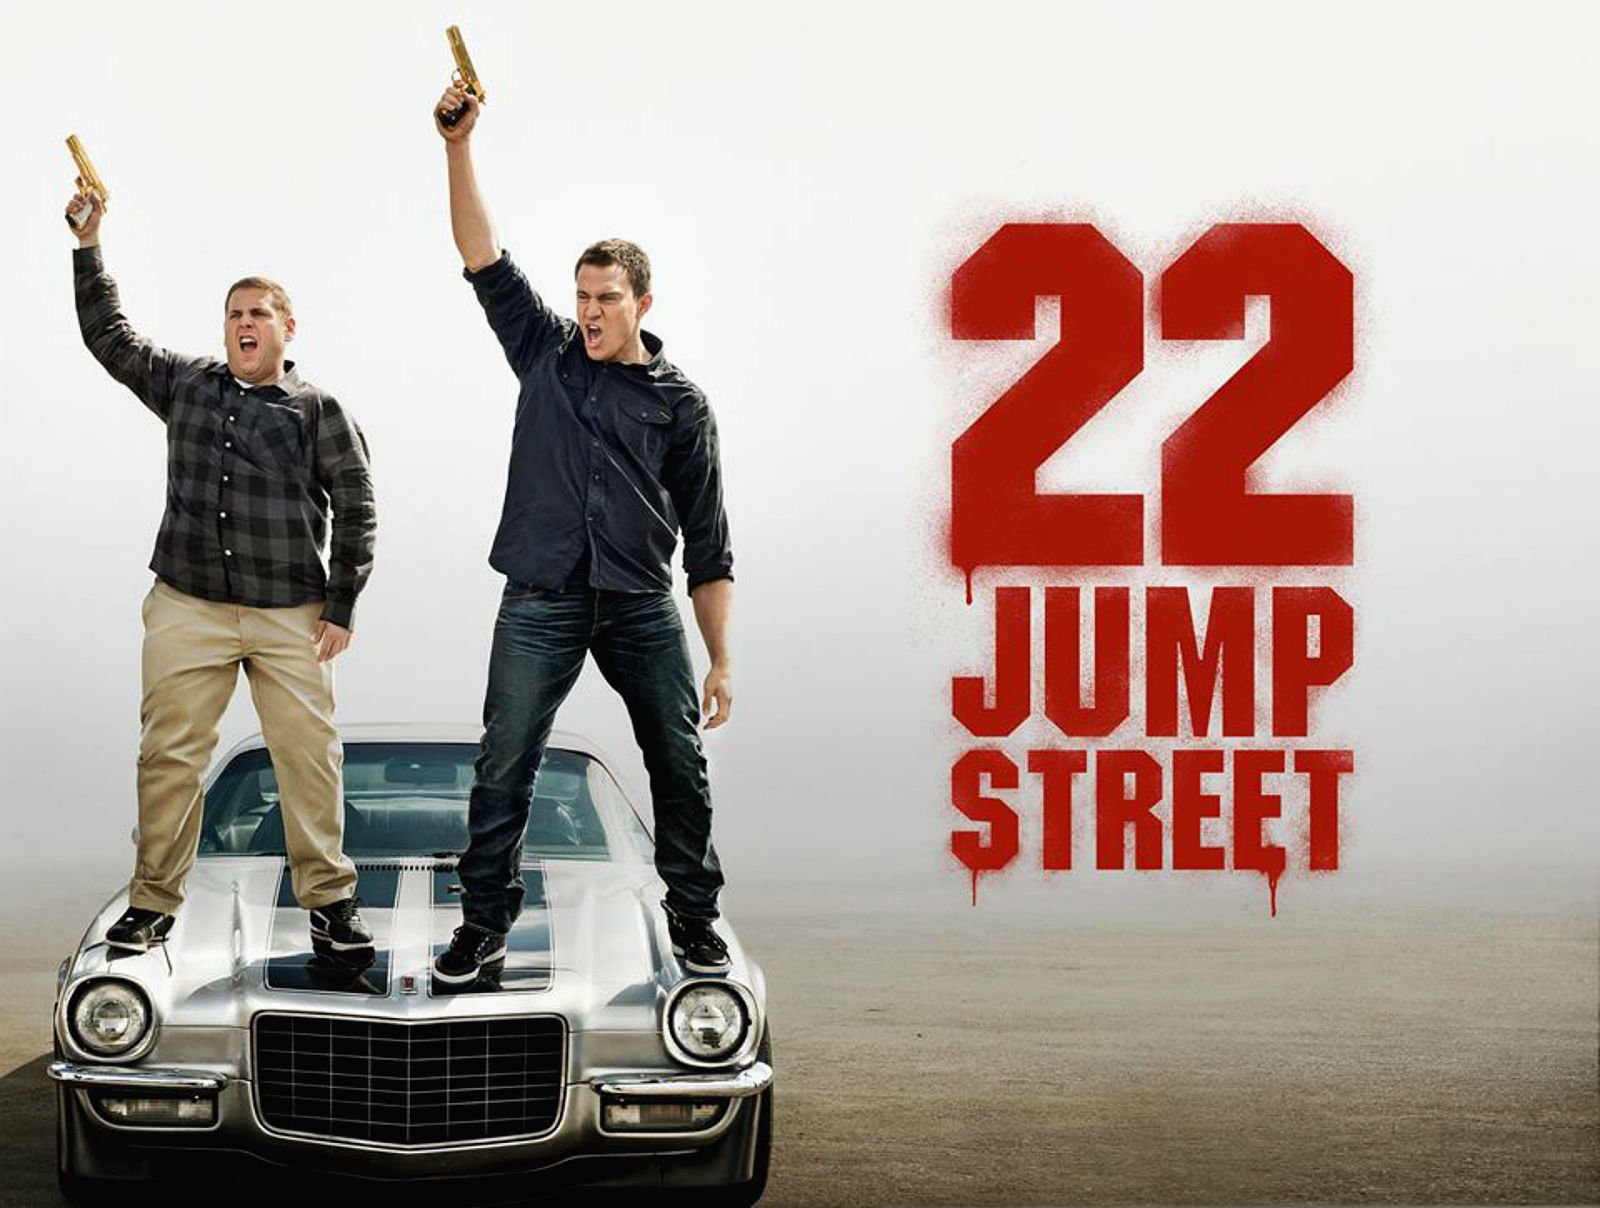 22 jump street, Action, Comedy, Crime, Jump, Street,  42 Wallpaper